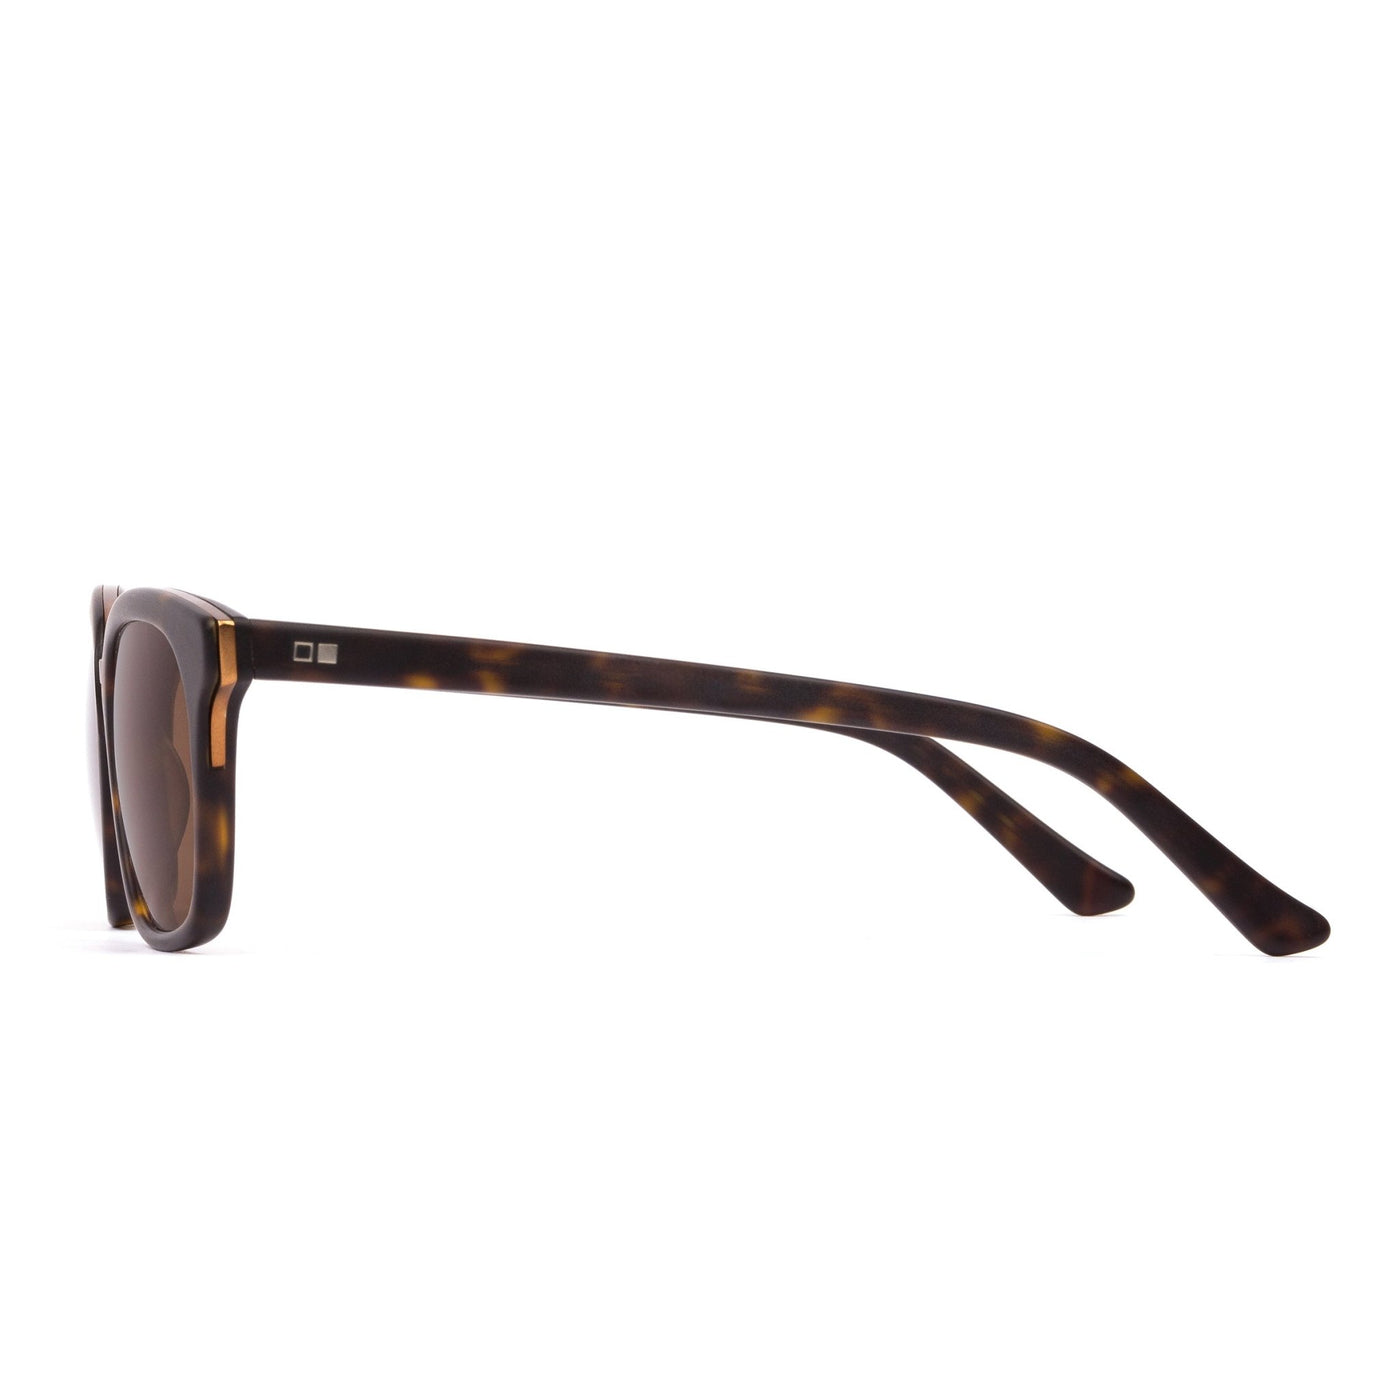 Brown tort OTIS Eyewear sunglasses from the side